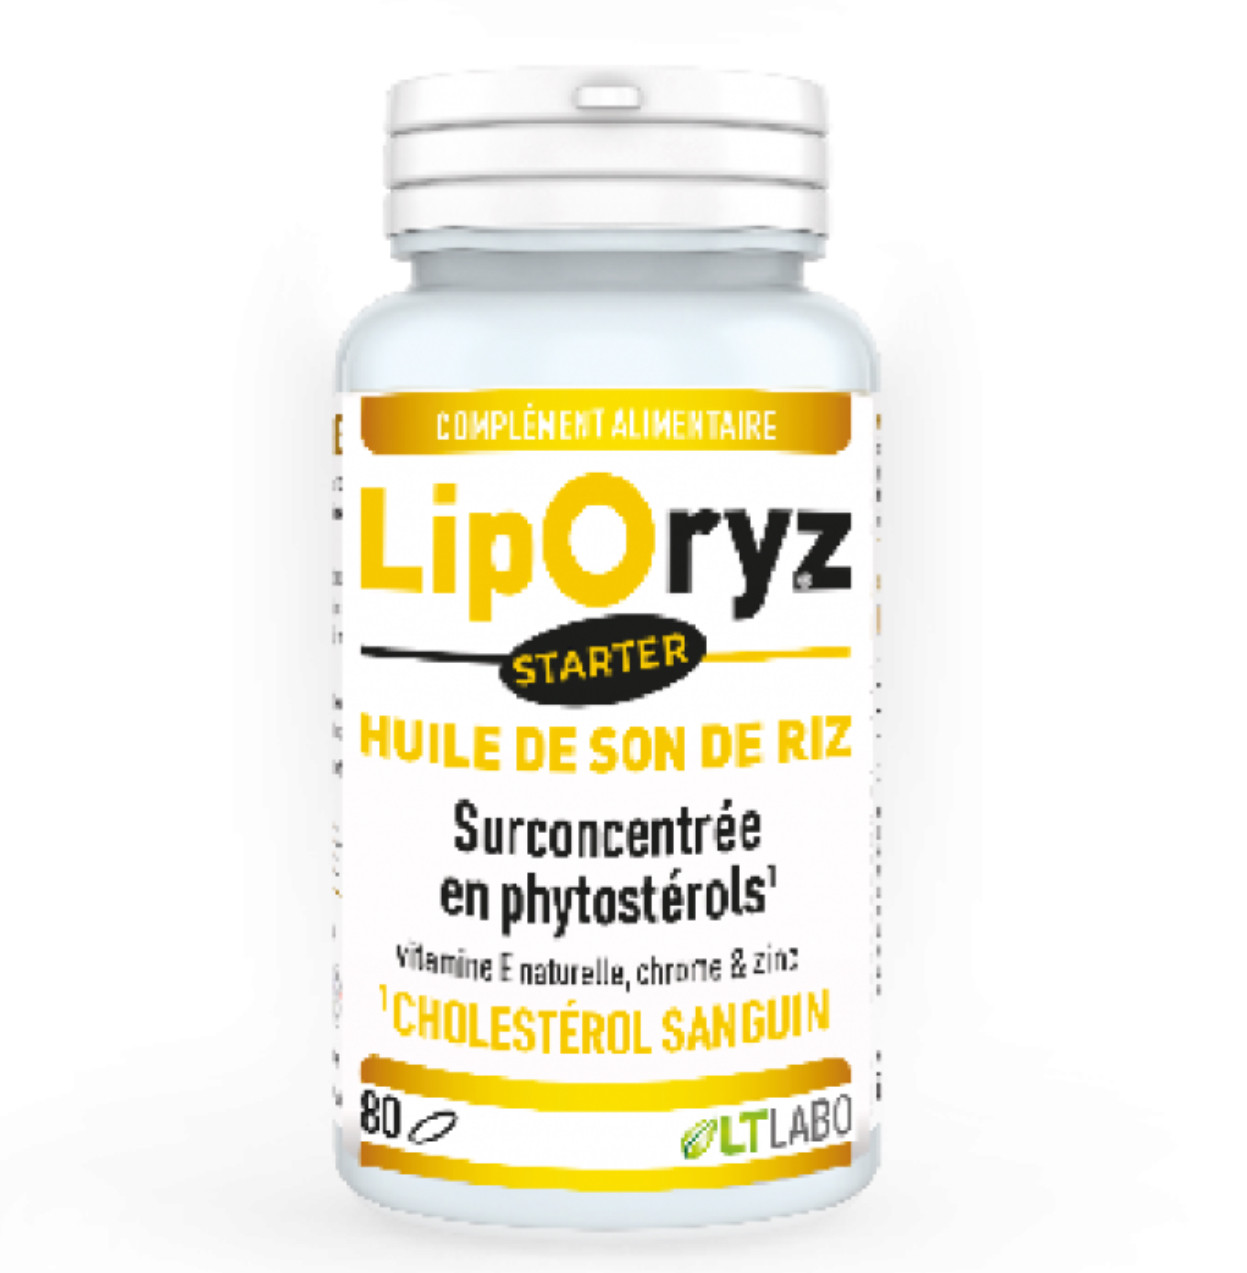 Liporyz starter - 80 capsules - LT LABO